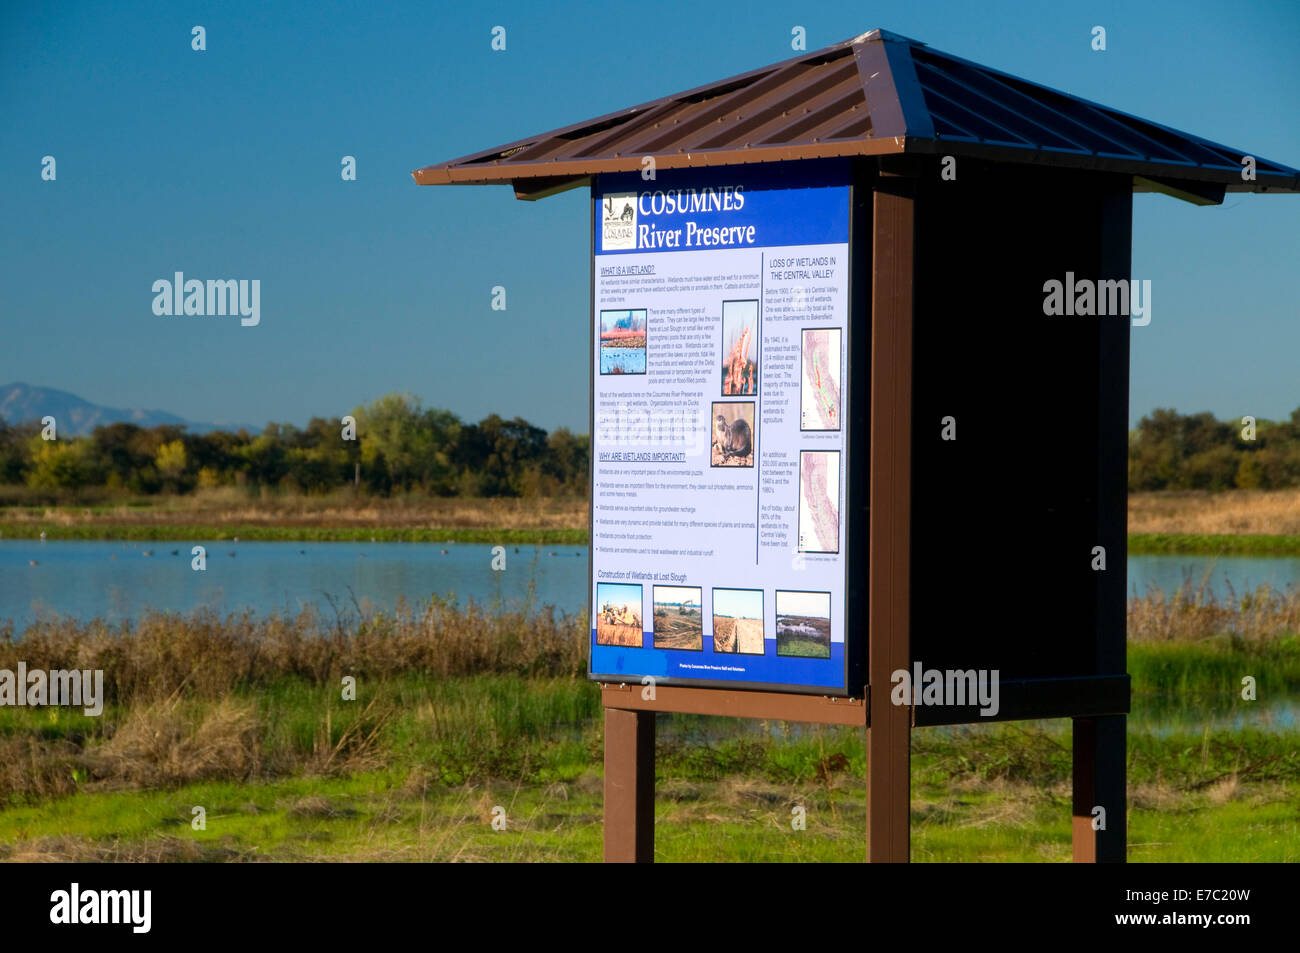 Lost Slough Wetlands Walk kiosk, Cosumnes River Preserve, California Stock Photo